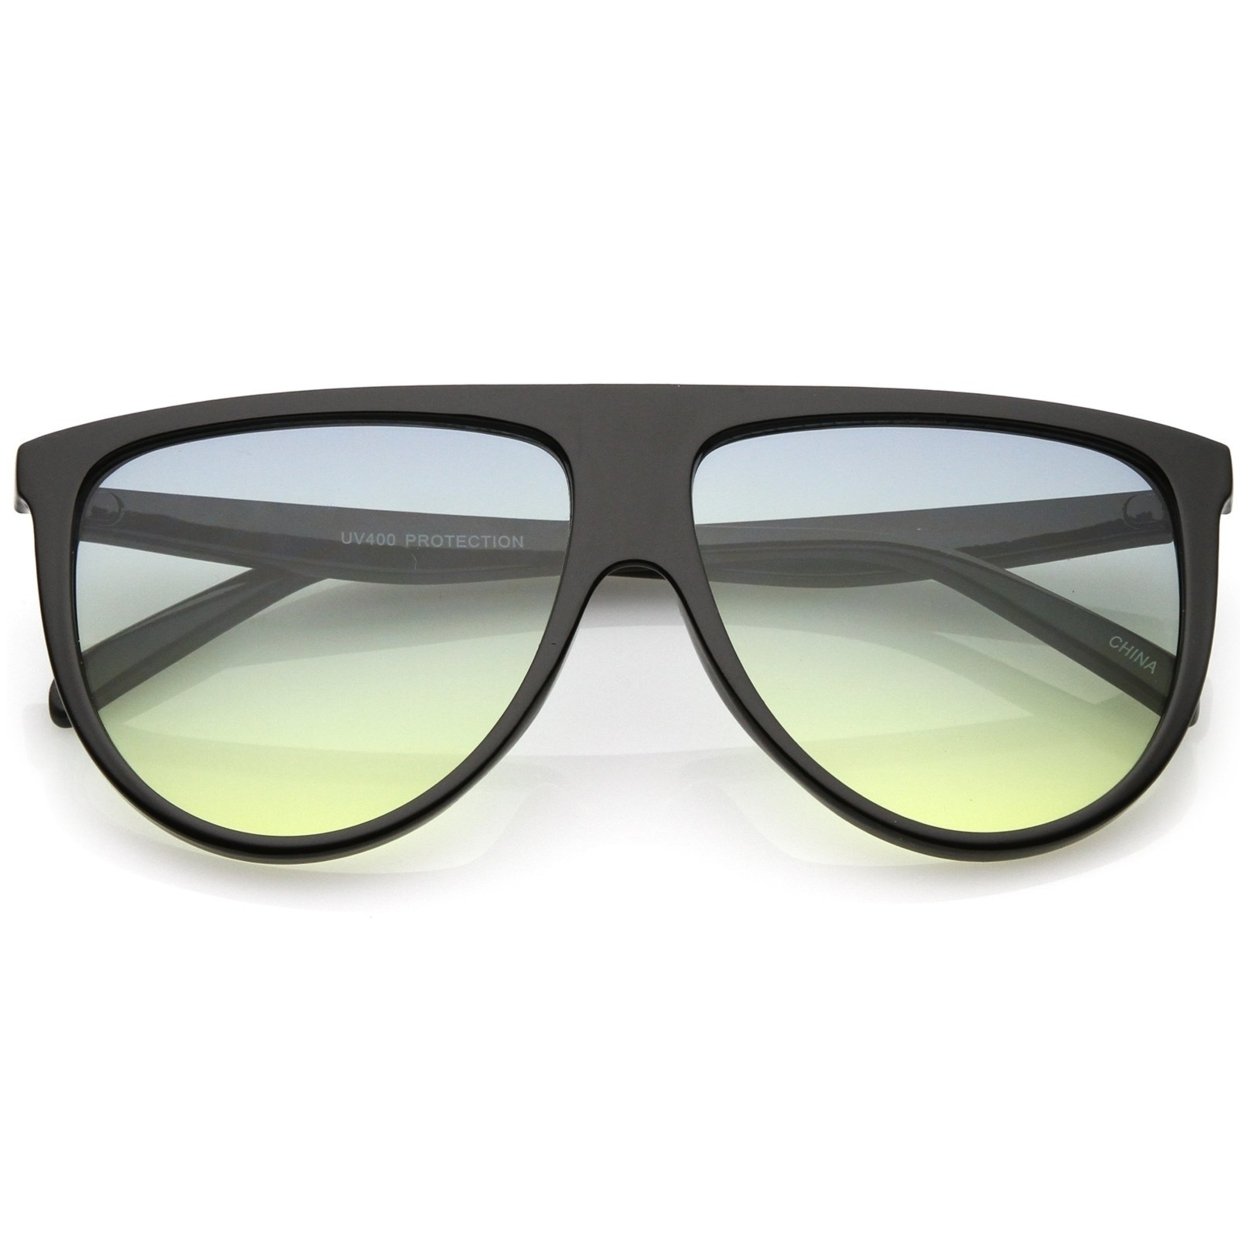 Oversize Flat Top Aviator Sunglasses Gradient Teardrop Flat Lens 60mm - Tortoise / Smoke Beige